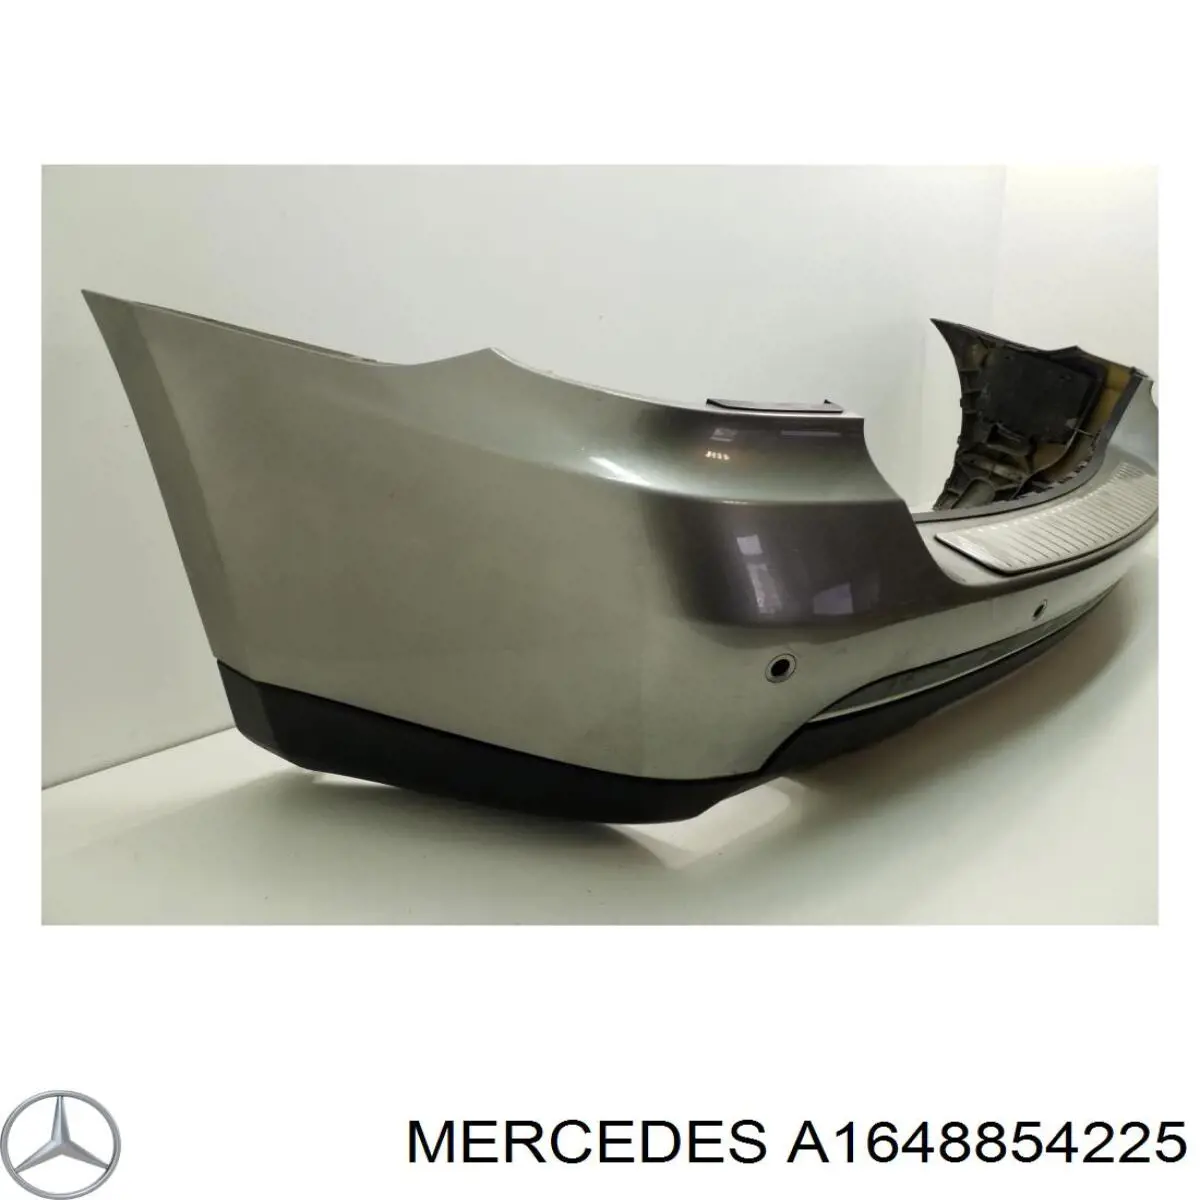 A16488542259999 Mercedes parachoques trasero